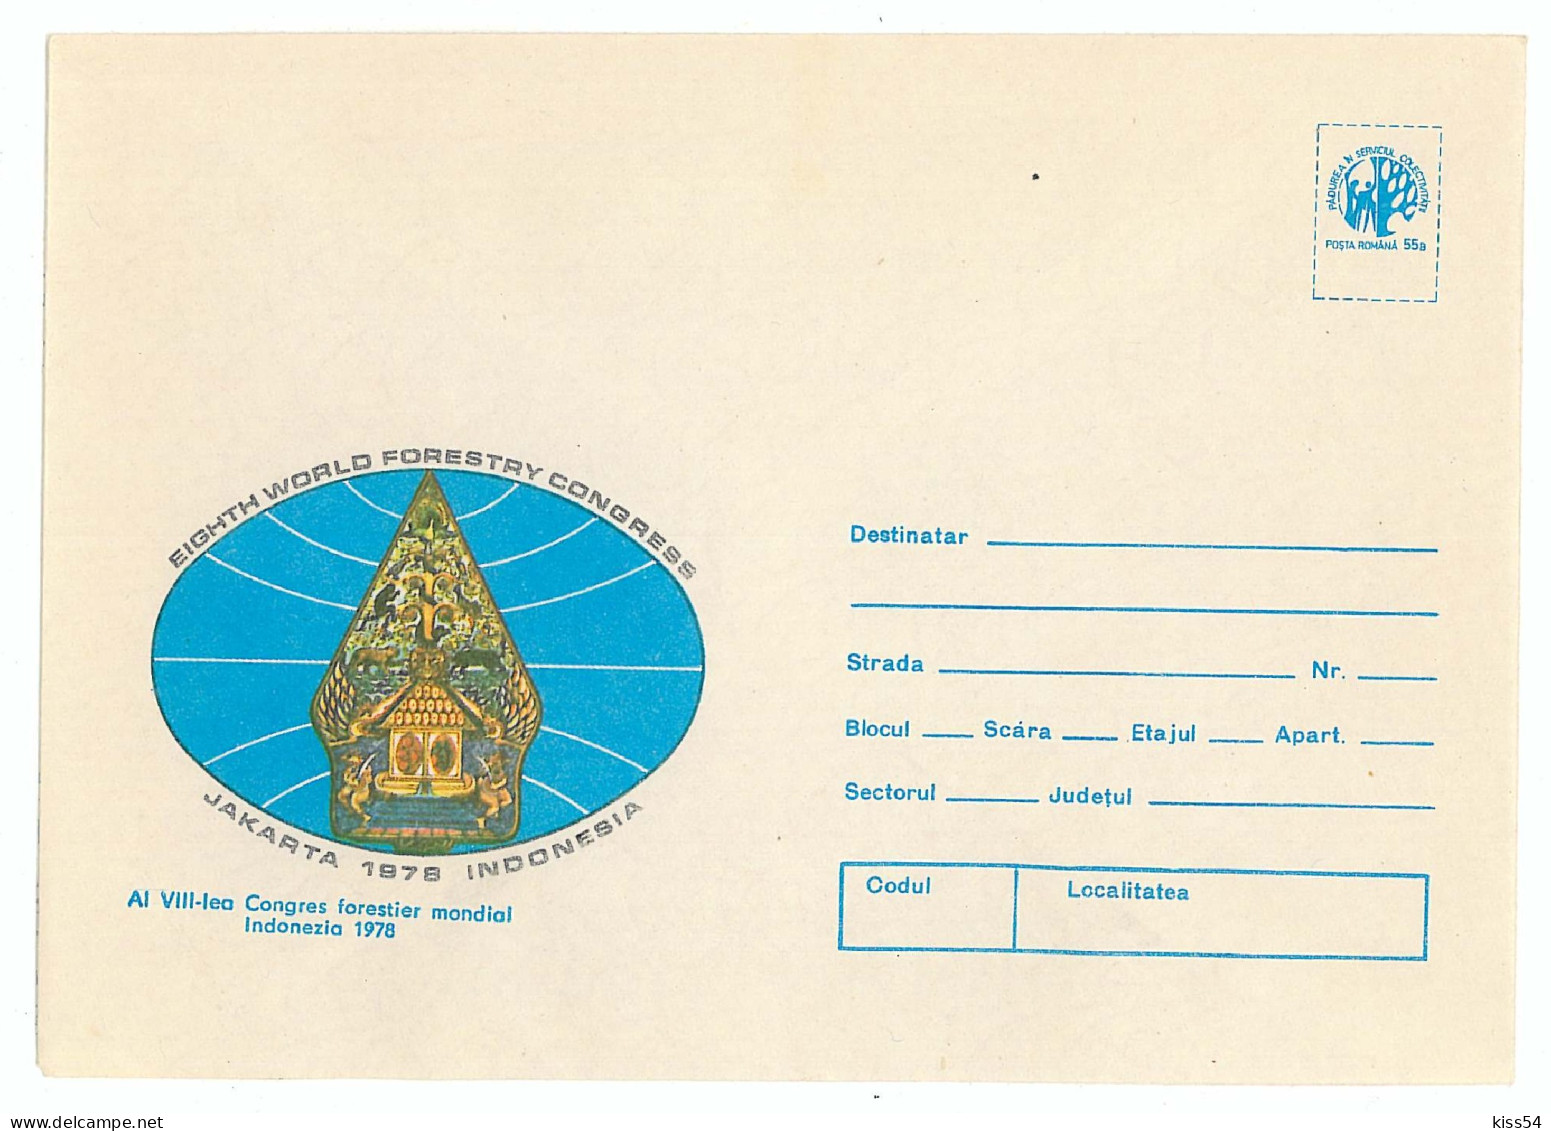 IP 78 - 252 JAKARTA, Indonesia, The World Forestry Congress - Stationery - Unused - 1978 - Interi Postali